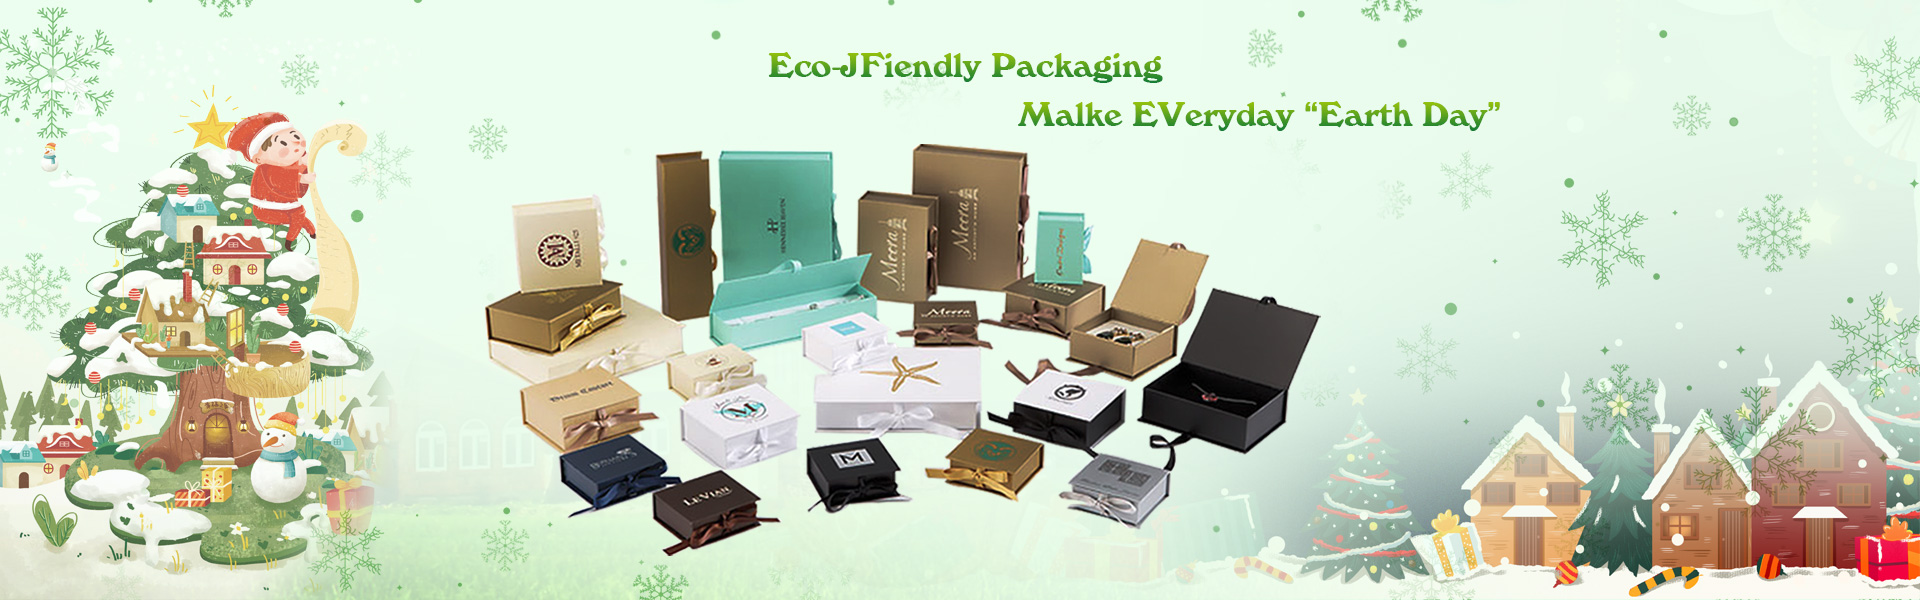 Ajándék doboz, csomagoló doboz, címke,Dongguan chengyuan packaging products Co,.Ltd